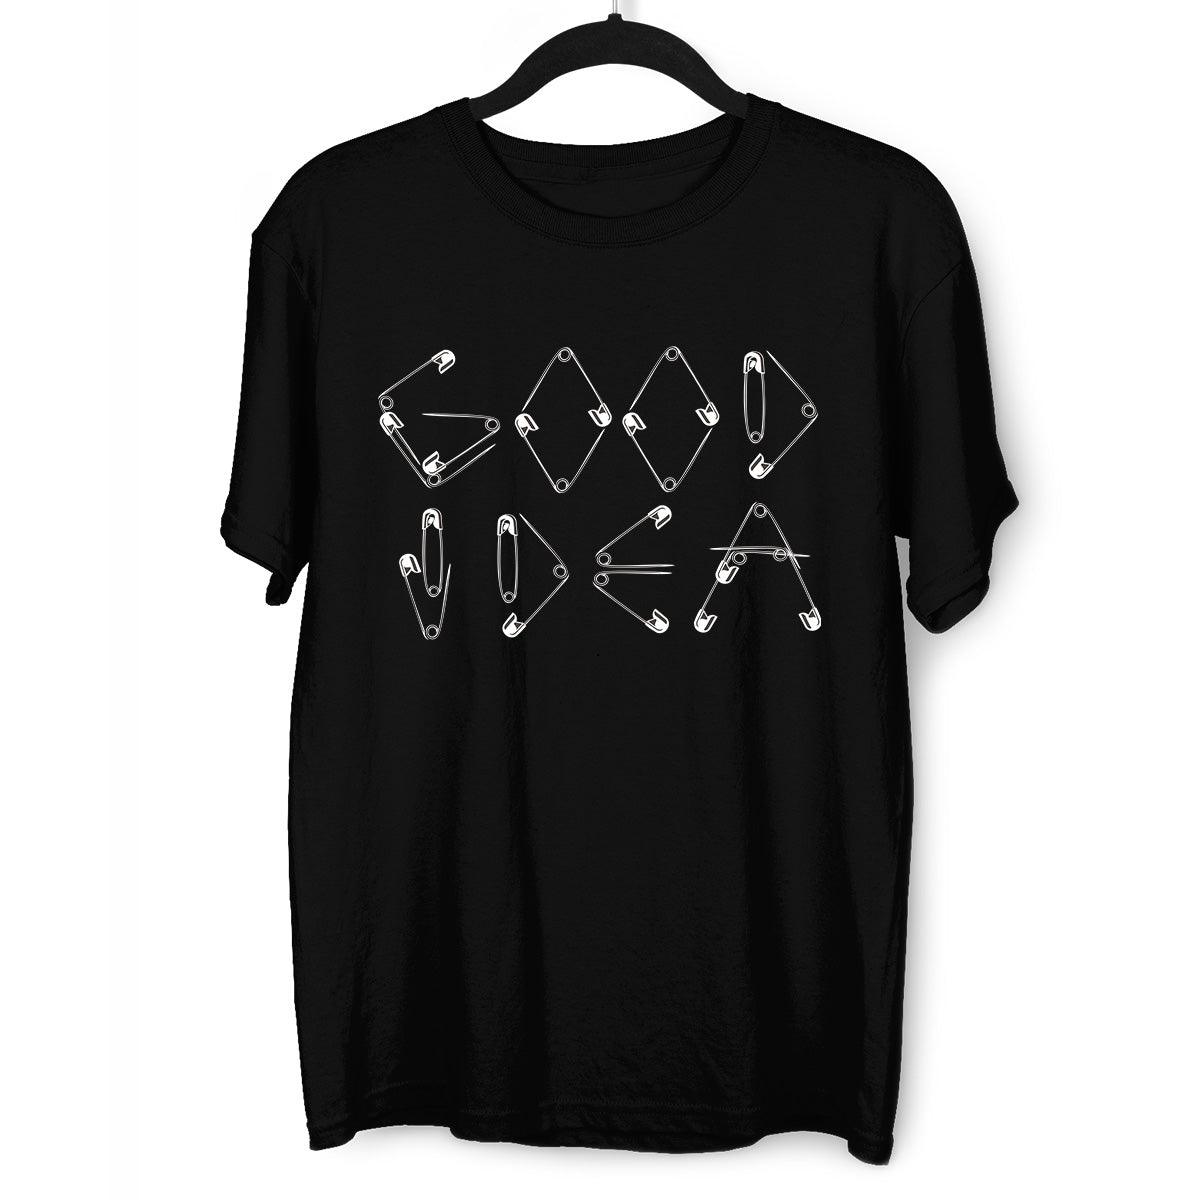 Good Idea - Good Idea Safety Pin funny Black White & Grey Unisex t-shirt - Kuzi Tees